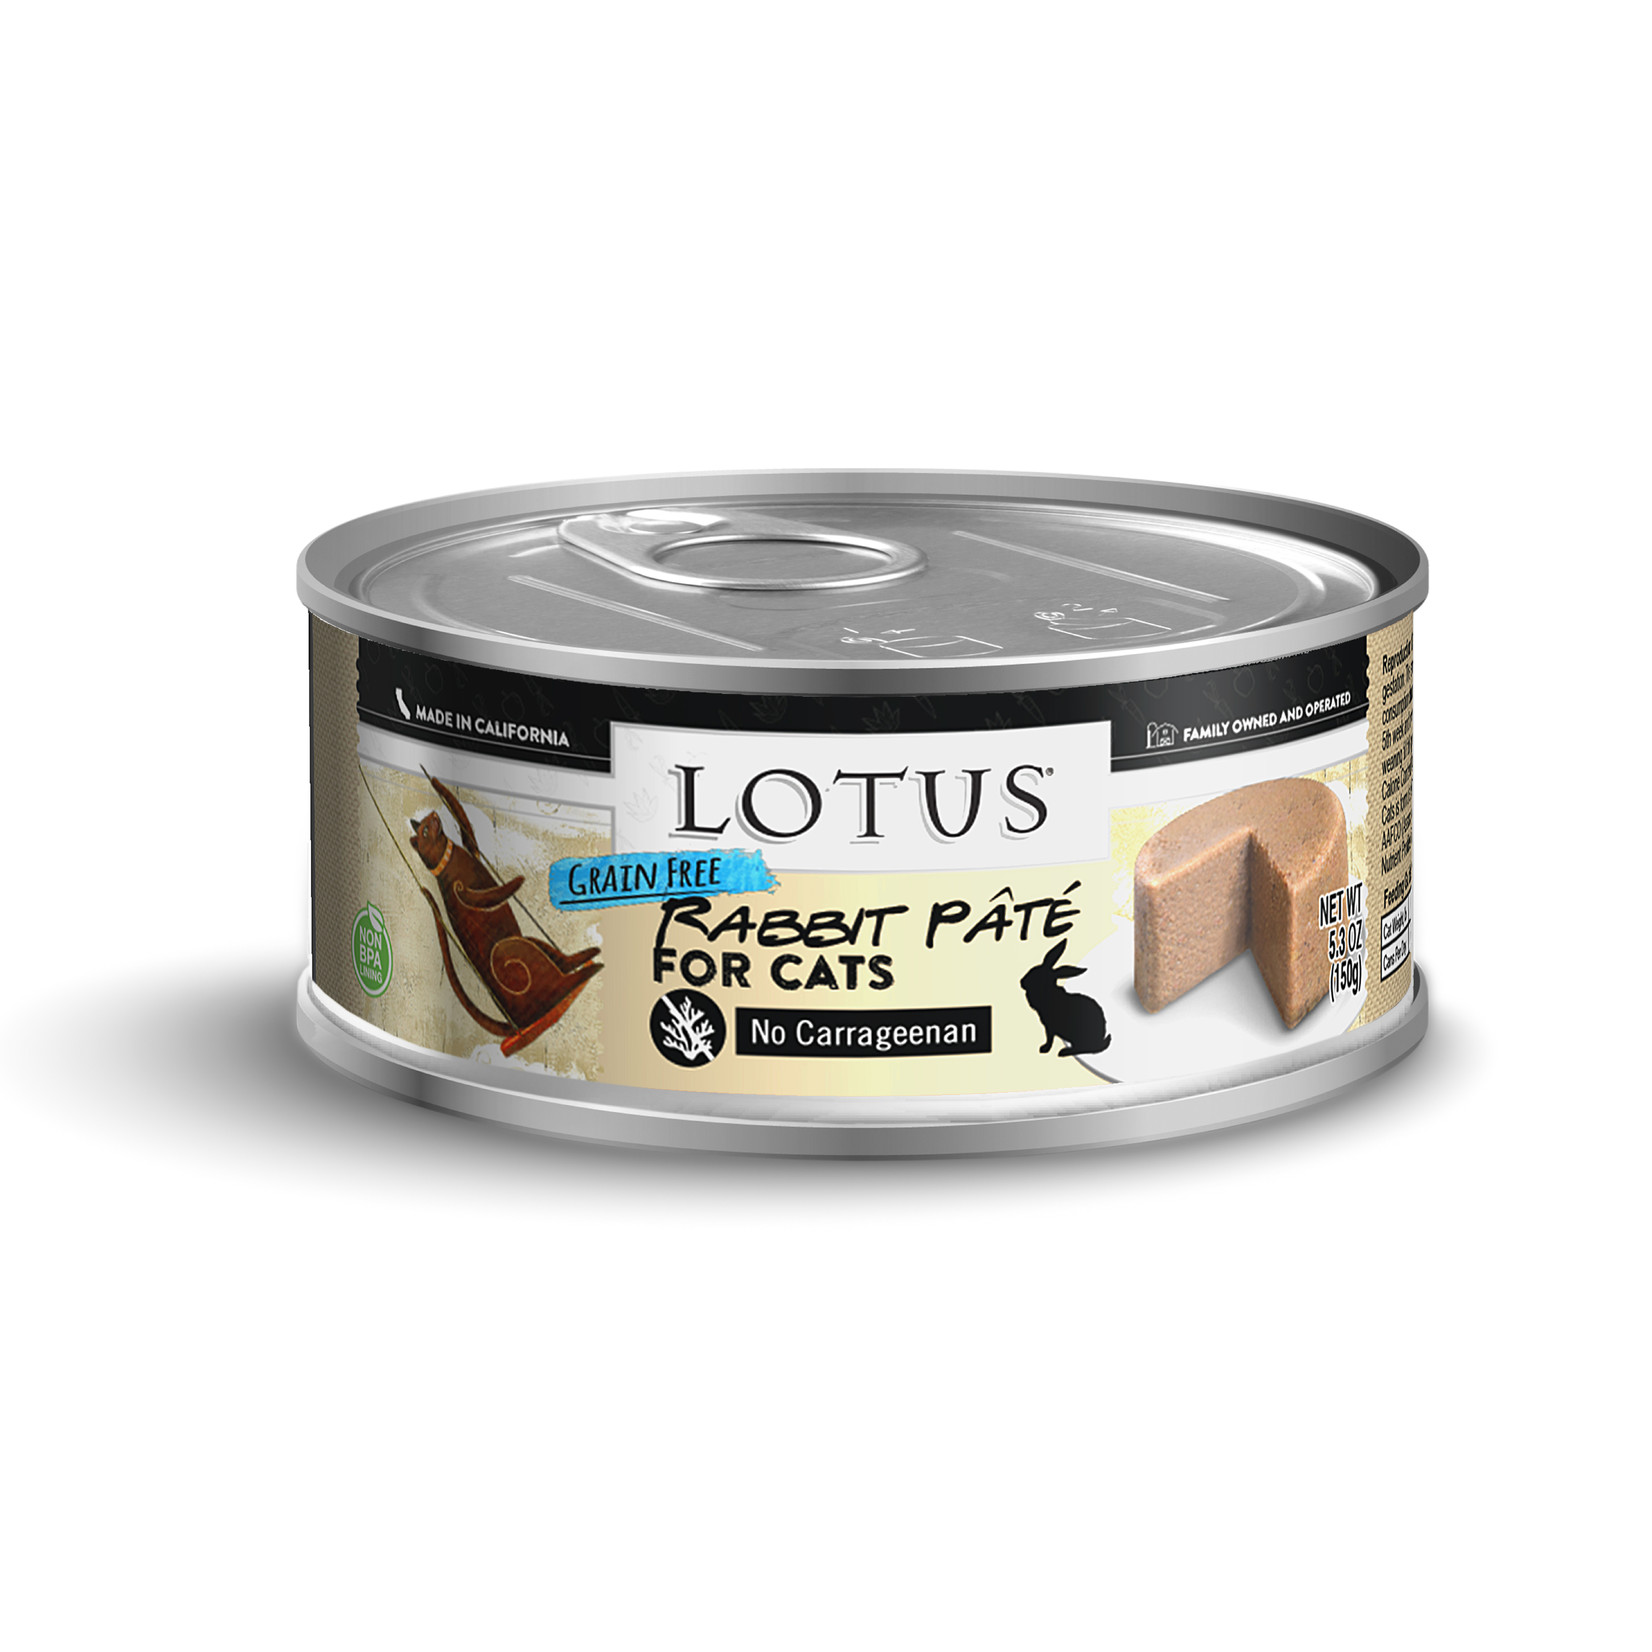 Lotus Lotus Rabbit Pate Canned Cat Food